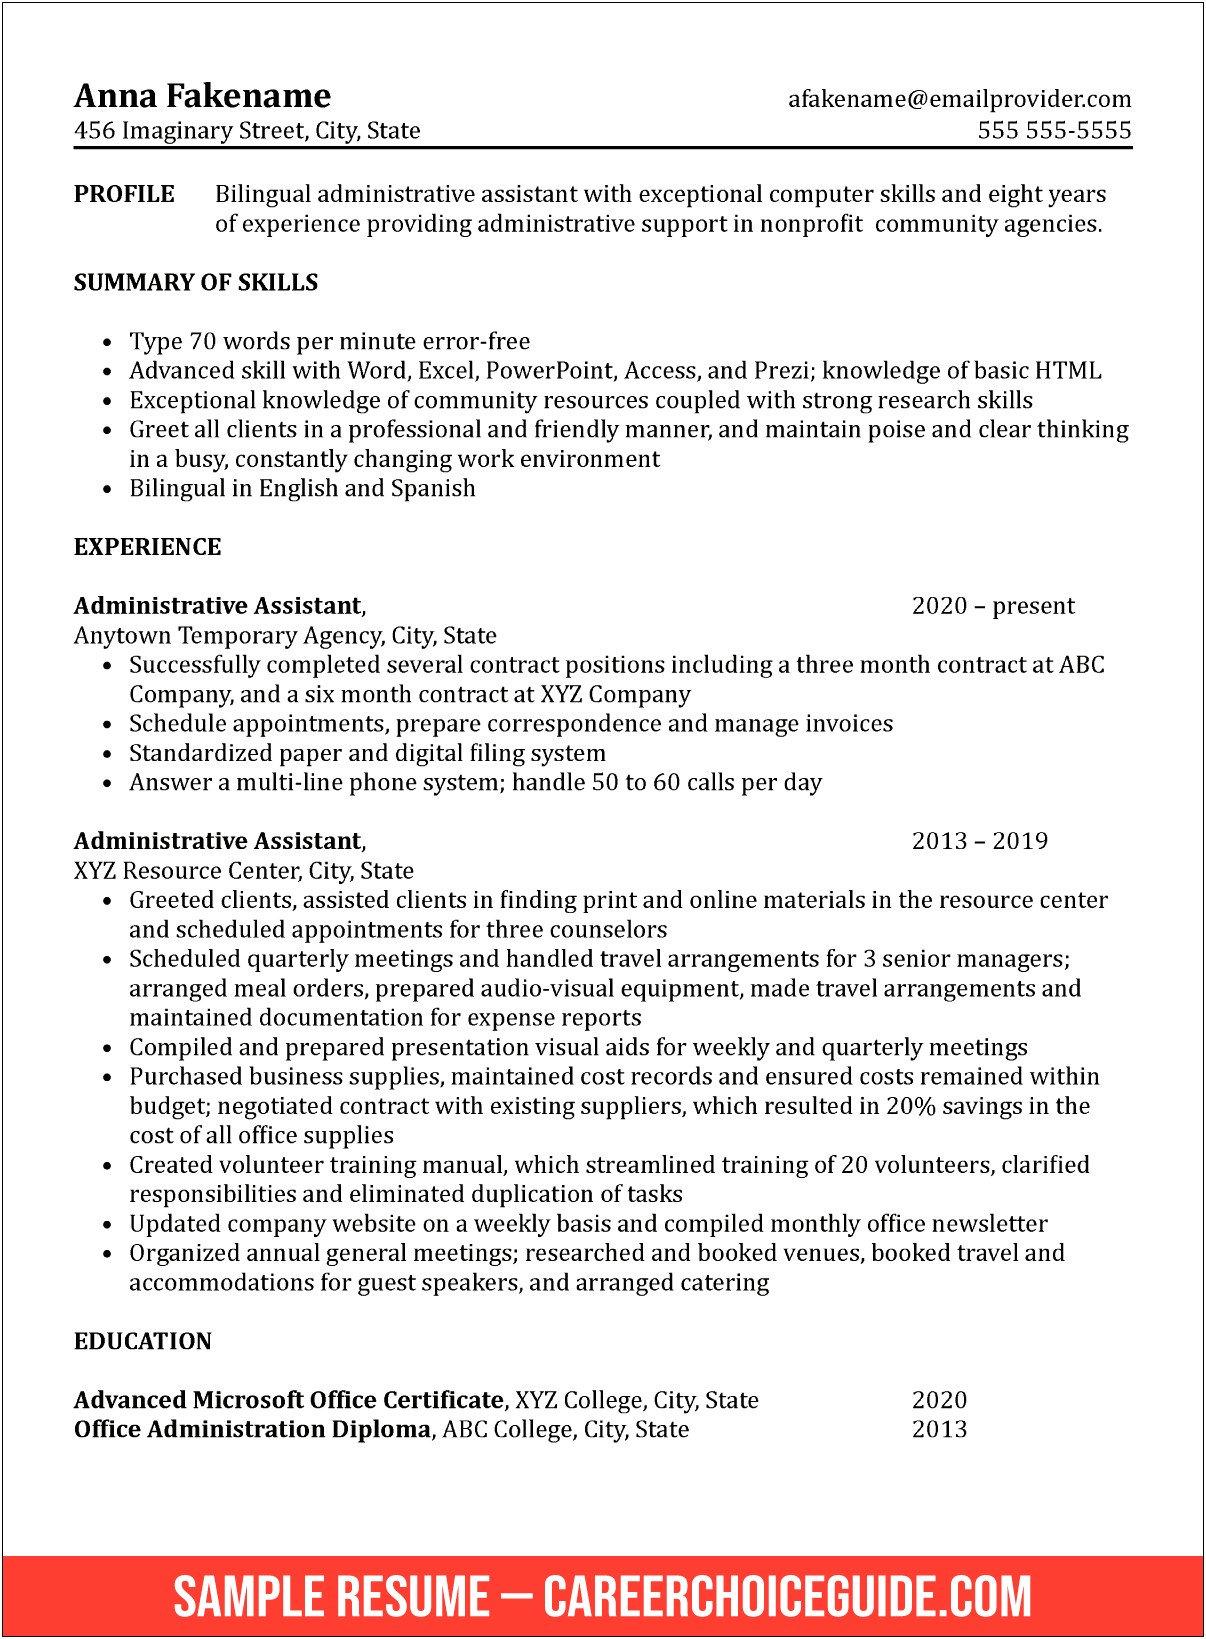 Administrative Assistant Resume Sample Resume